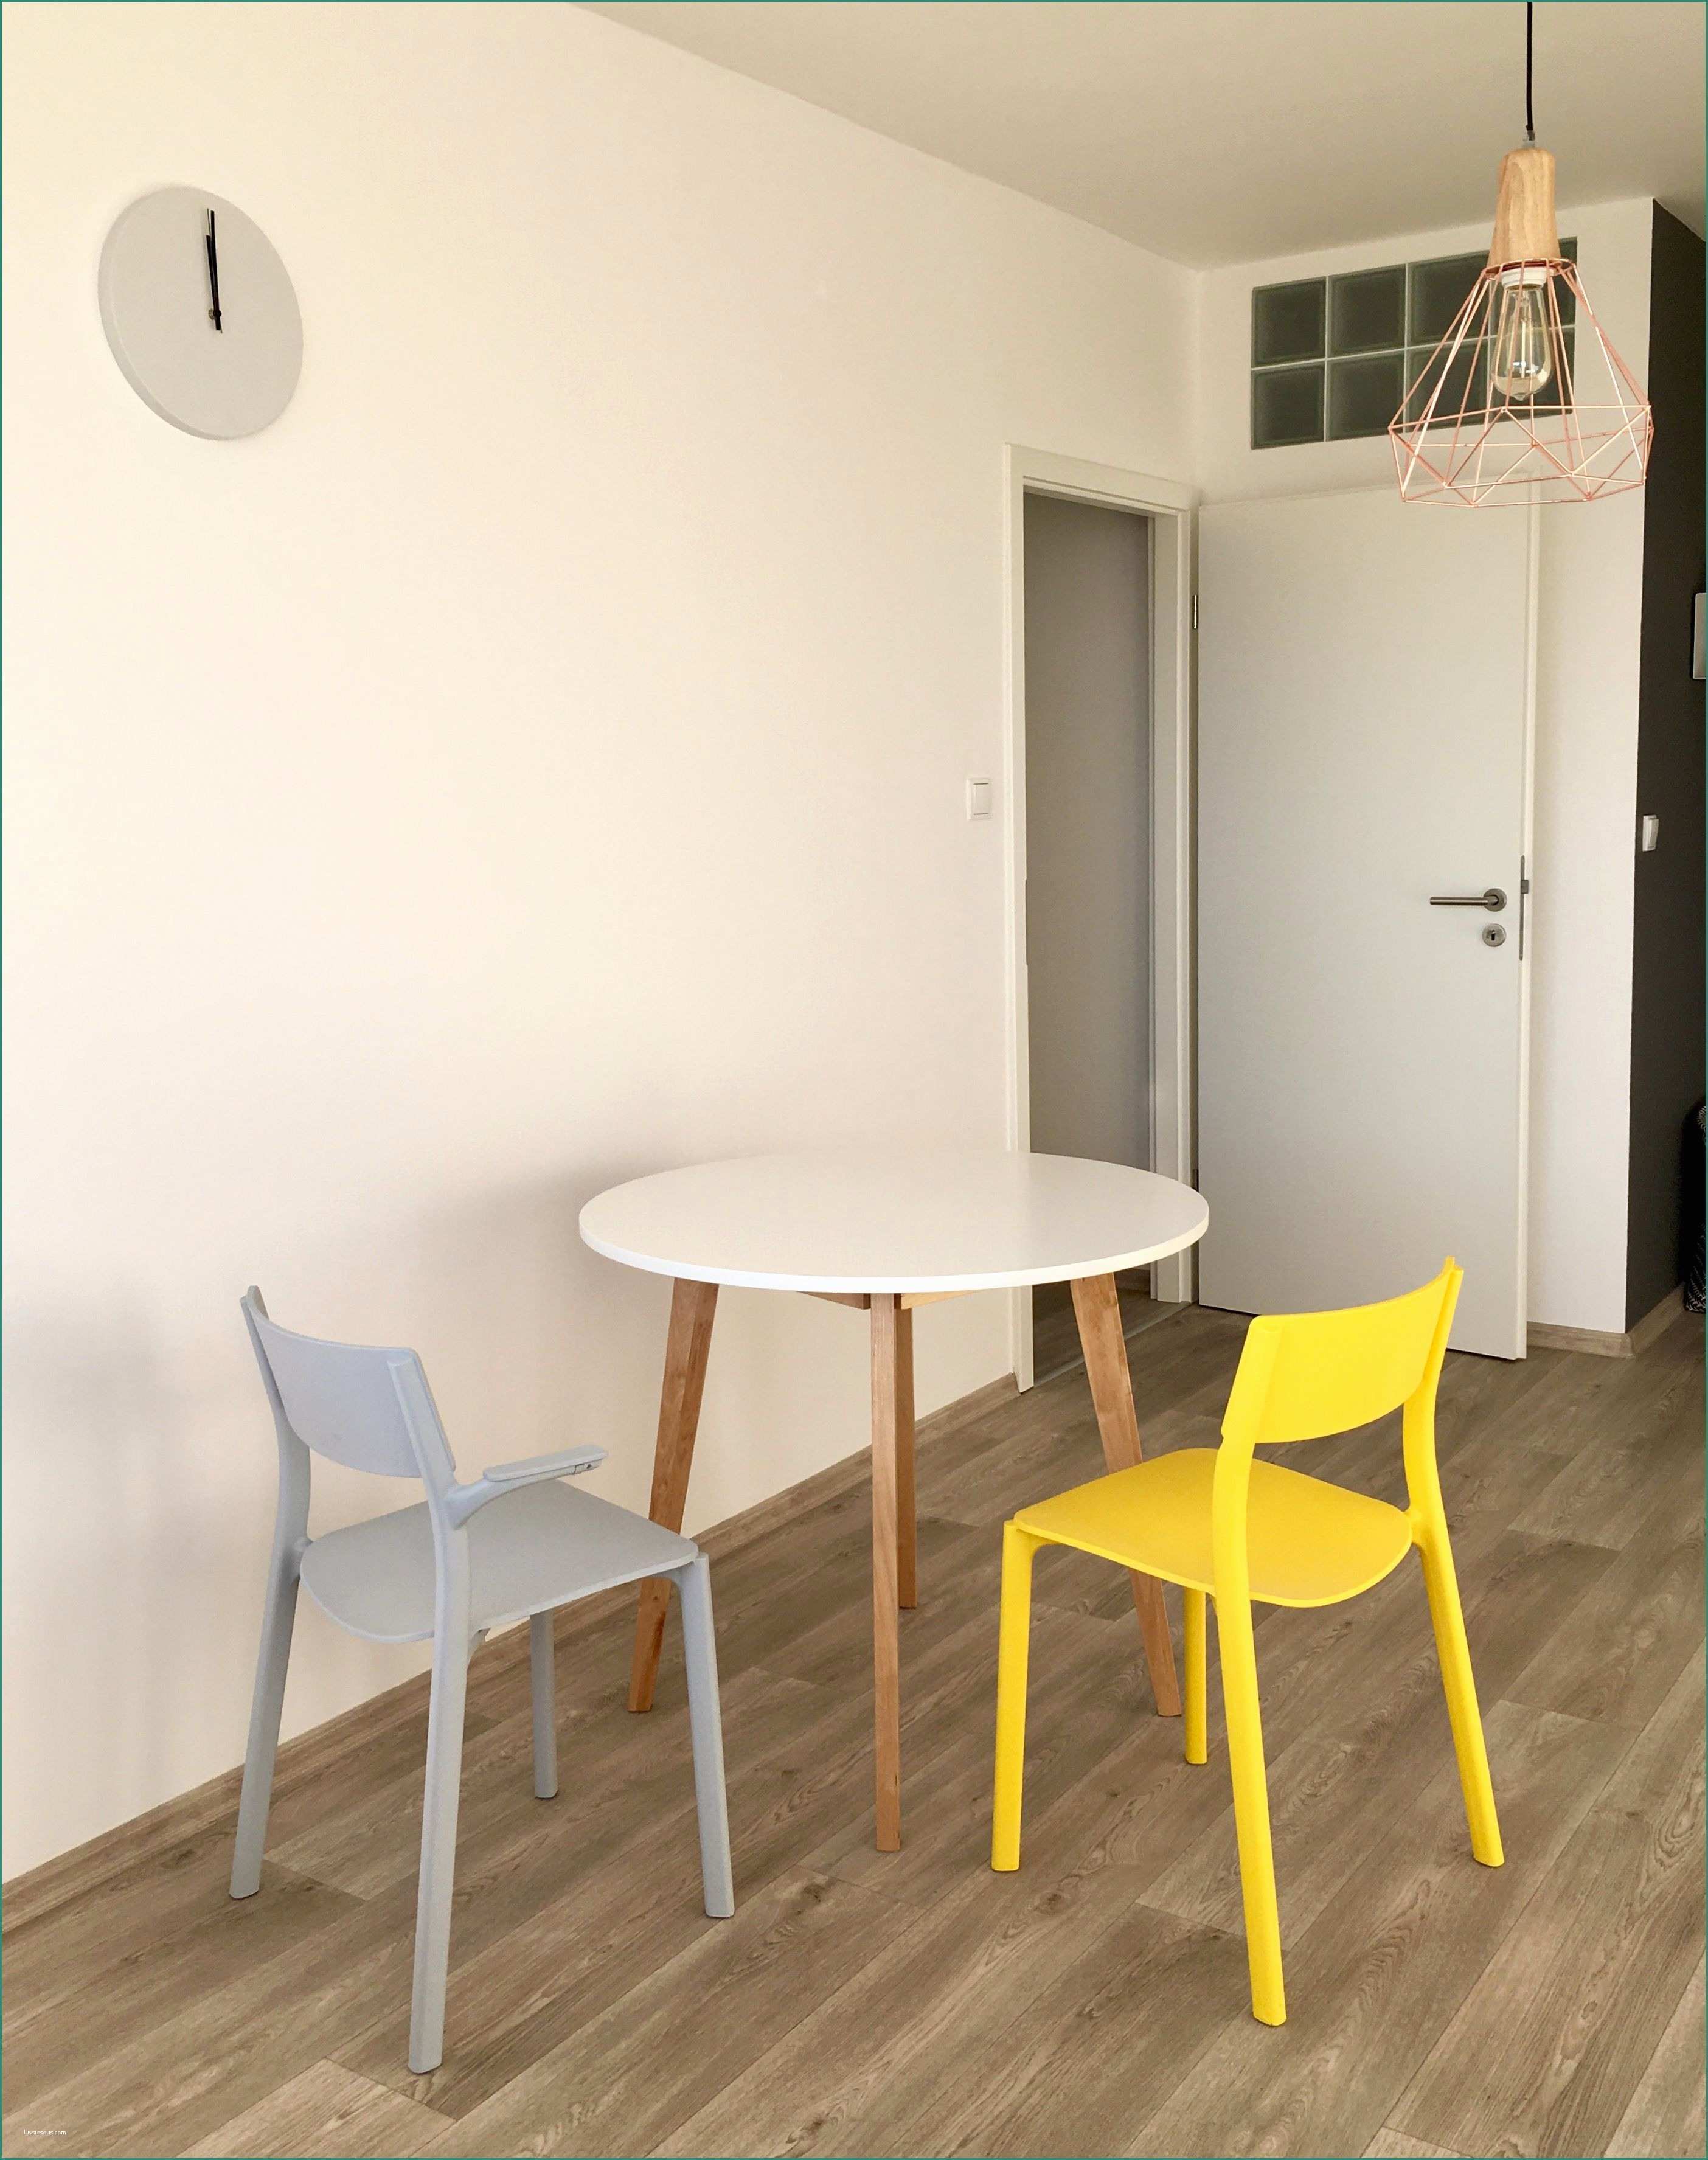 Alvar Aalto Sedie E Ikea Chair Janinge Home Design Pinterest